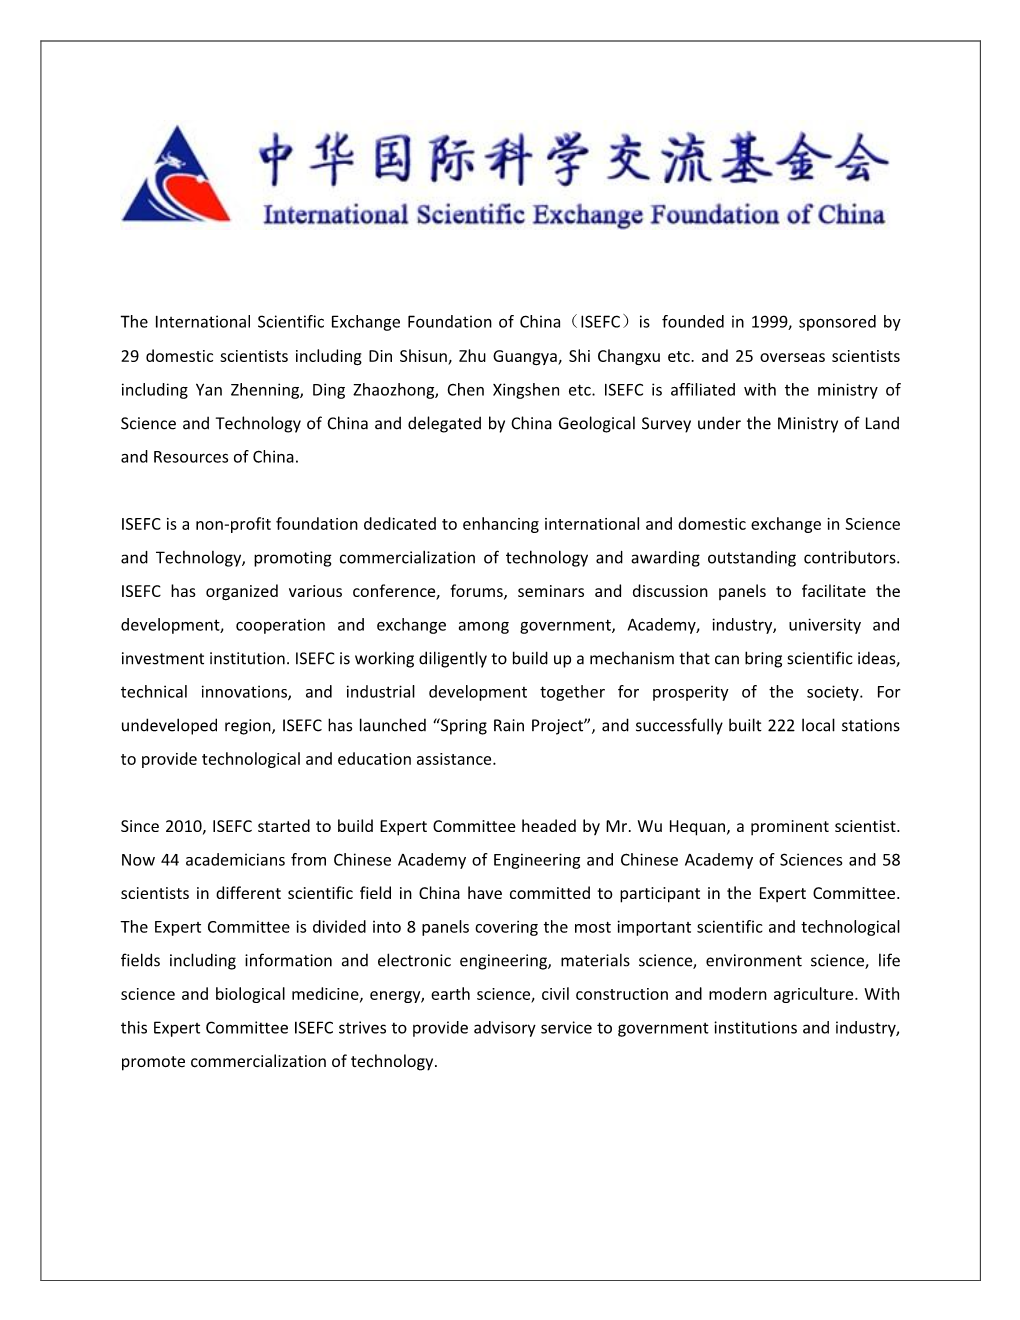 The International Scientific Exchange Foundation of China